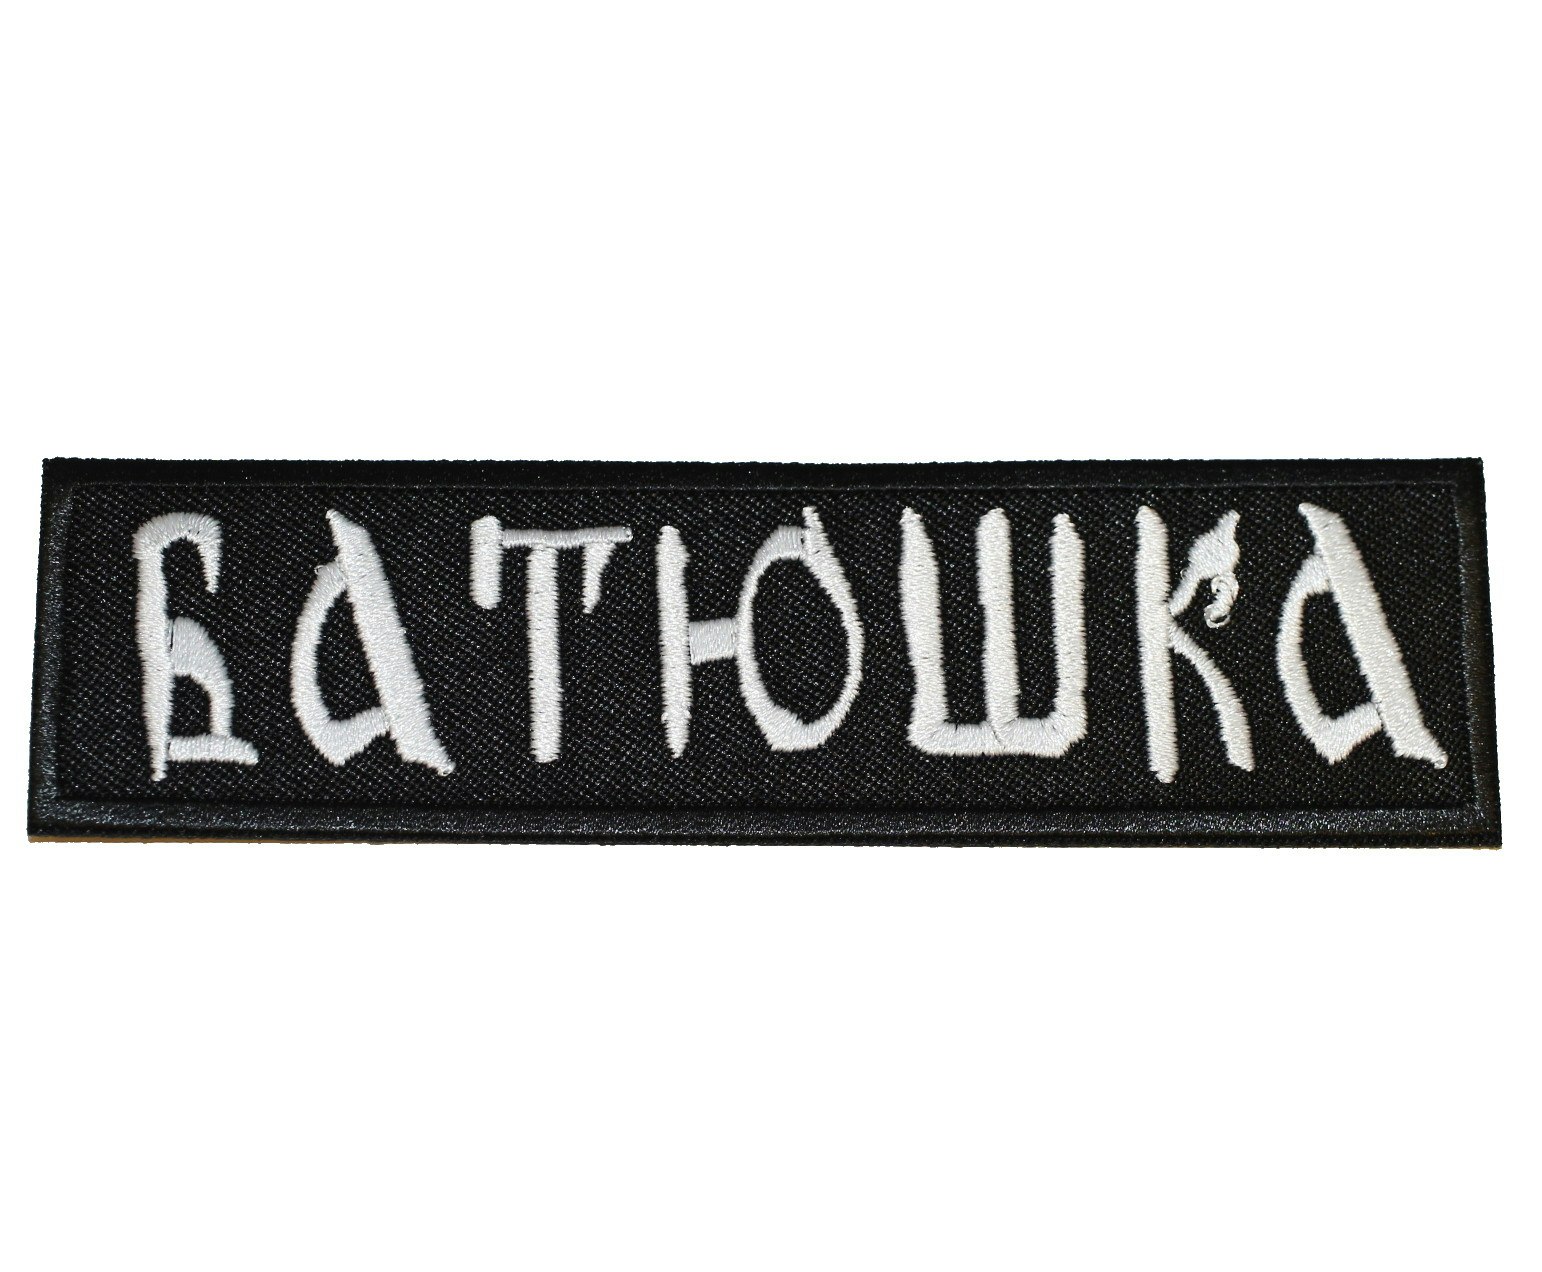 BATUSHKA logo patch